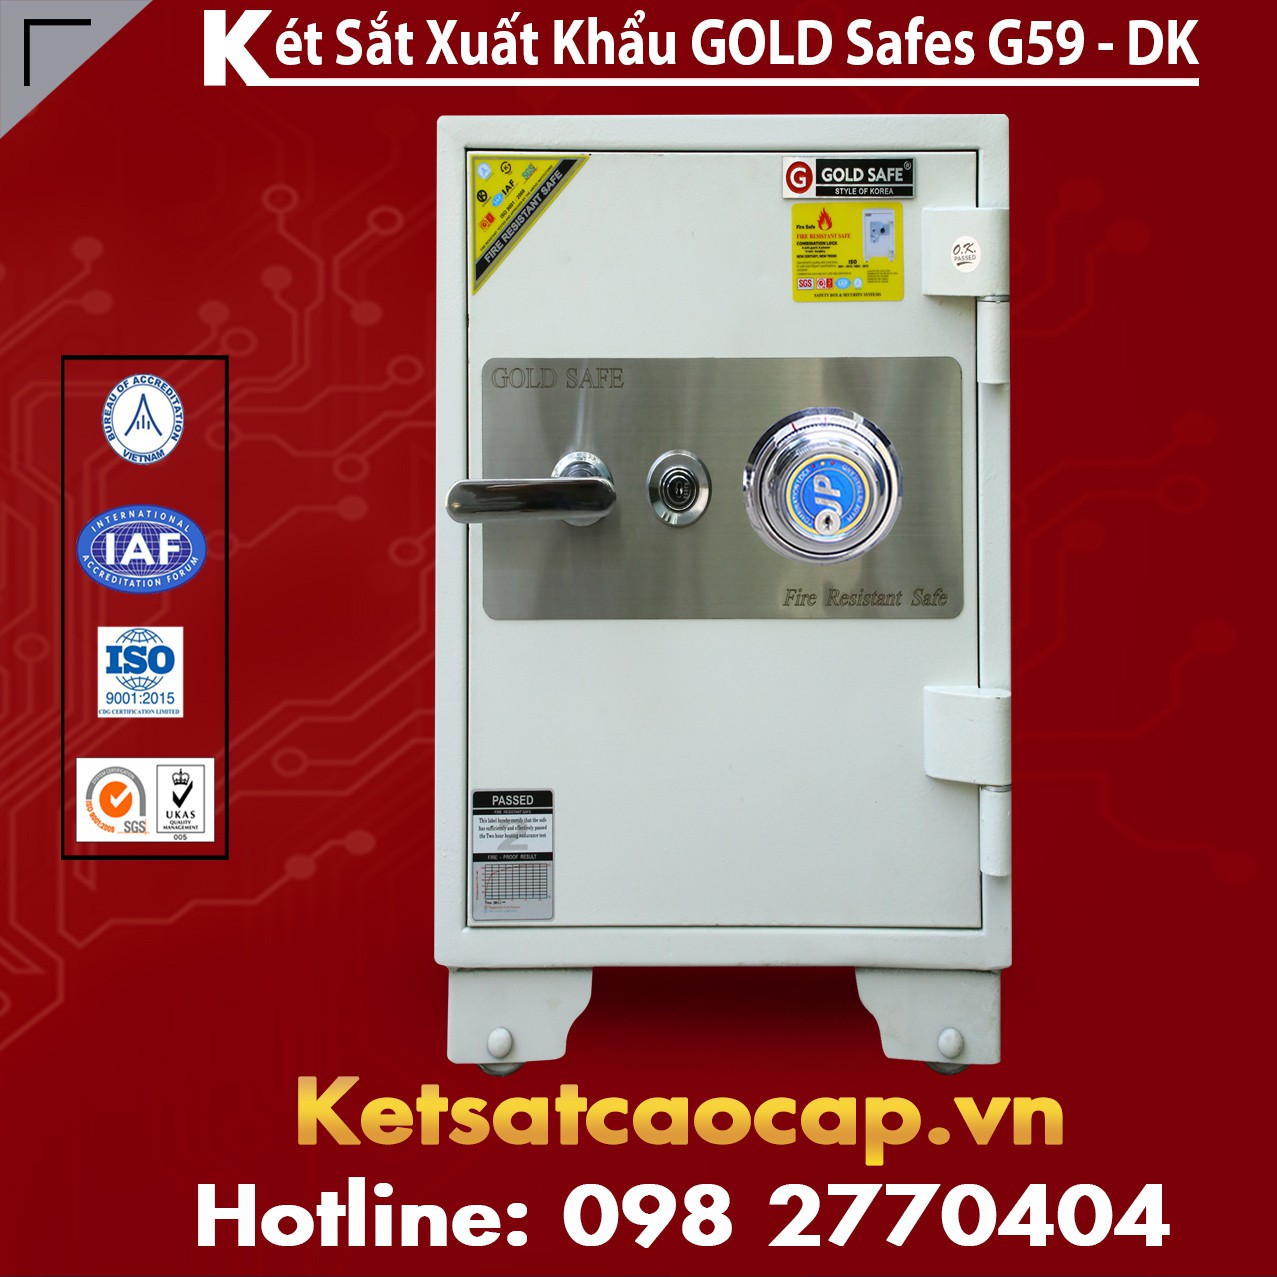 Két Sắt Phú Quý GOLD SAFES G590 DK White